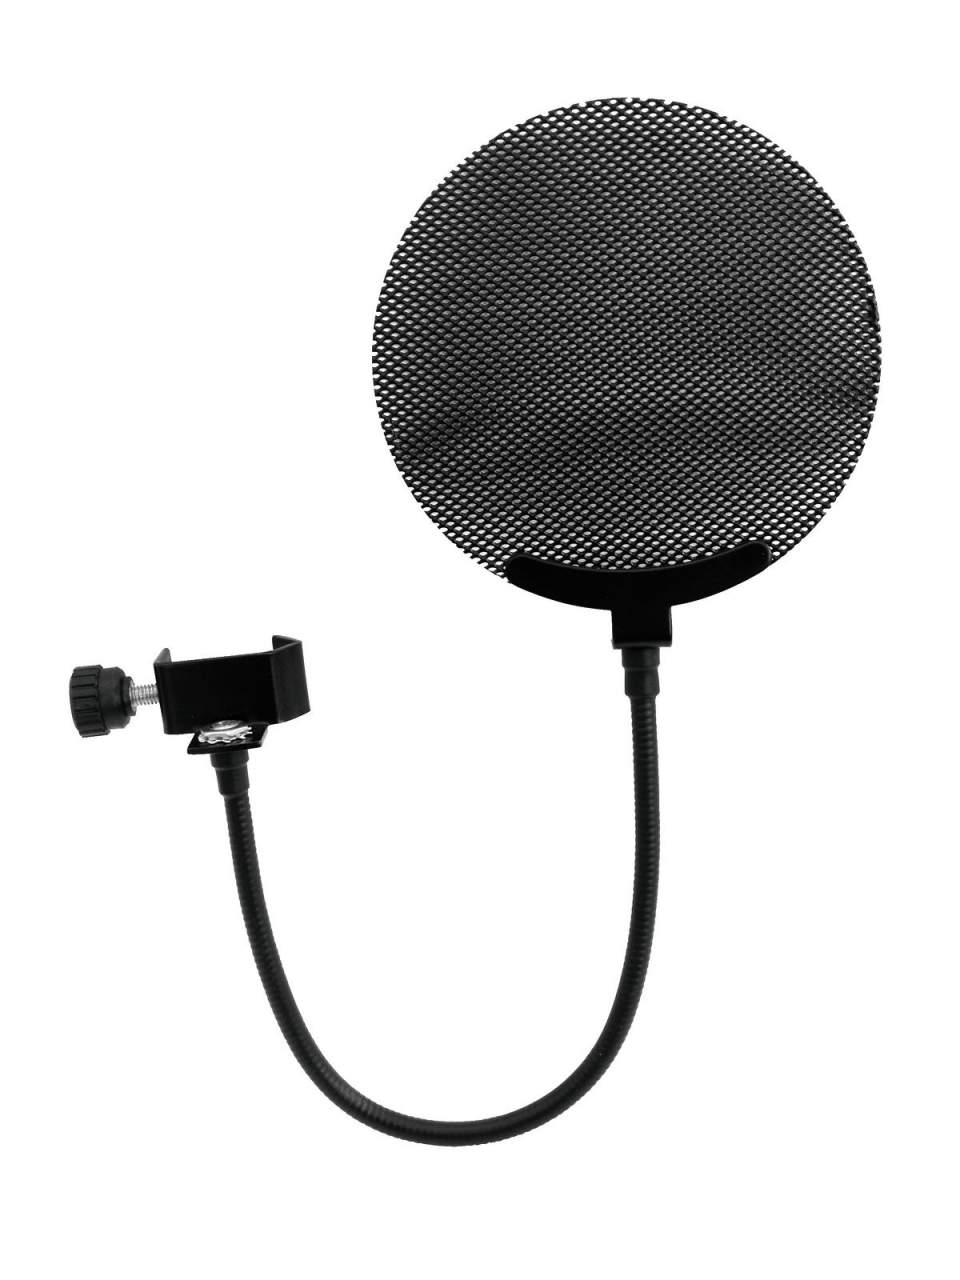 OMNITRONIC Mikrofon-Popfilter- Metall schwarz